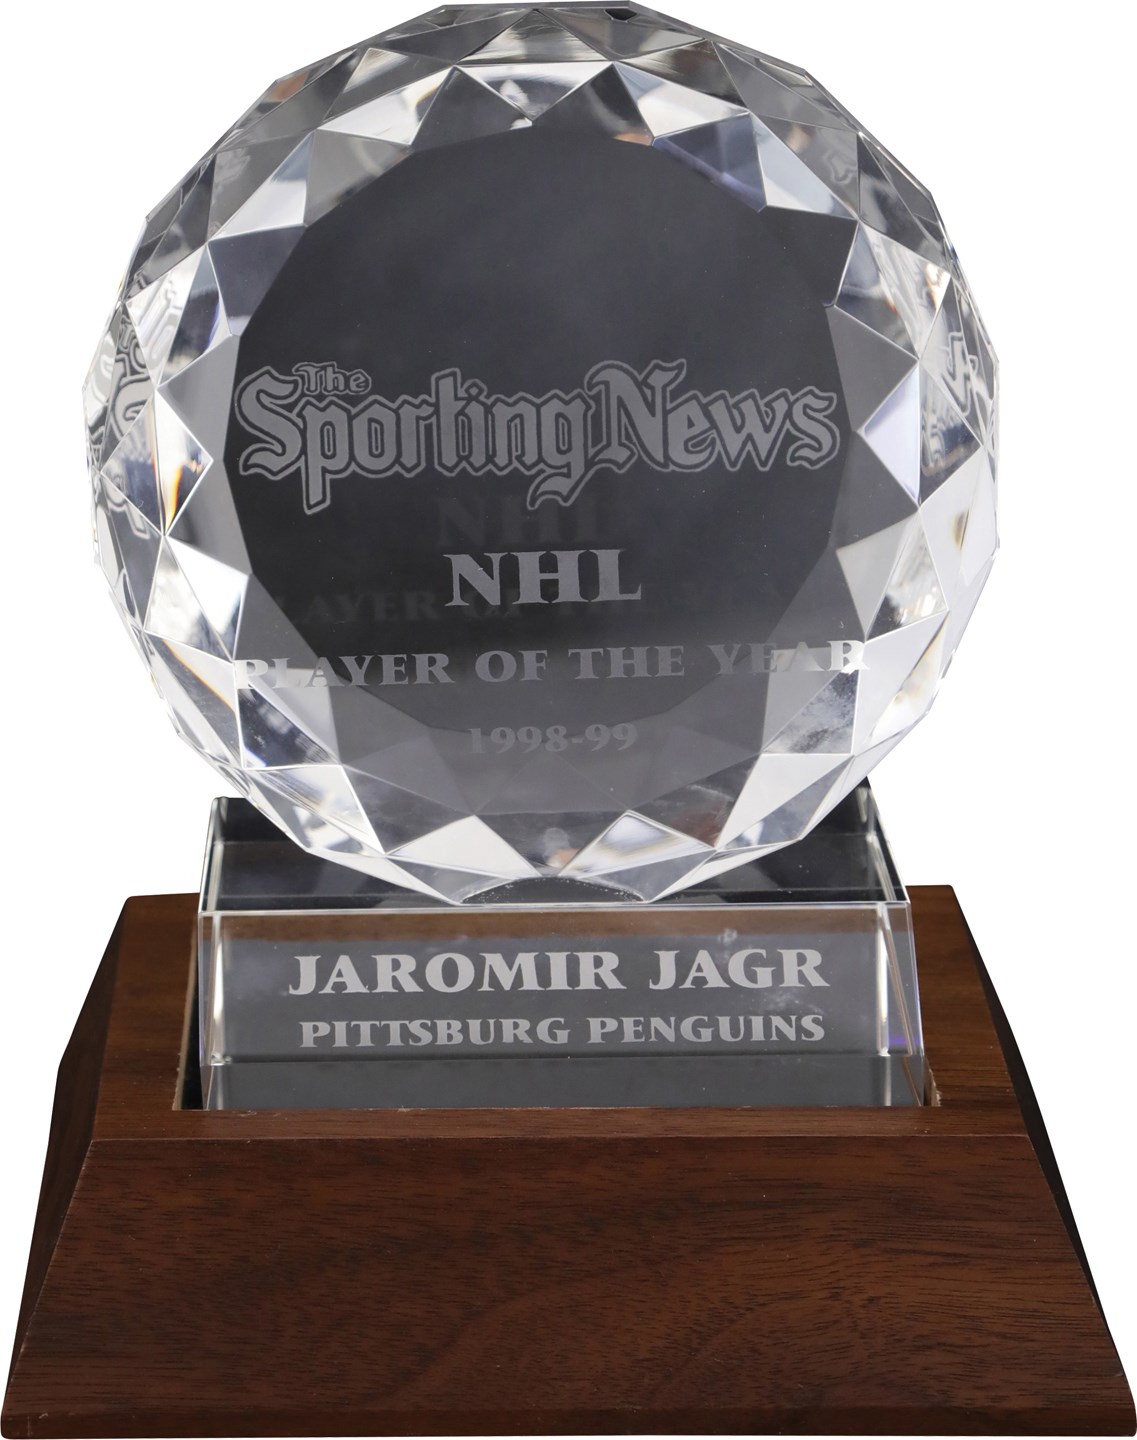 Hockey - 1998-99 Jaromir Jagr Sporting News NHL Player of the Year Award